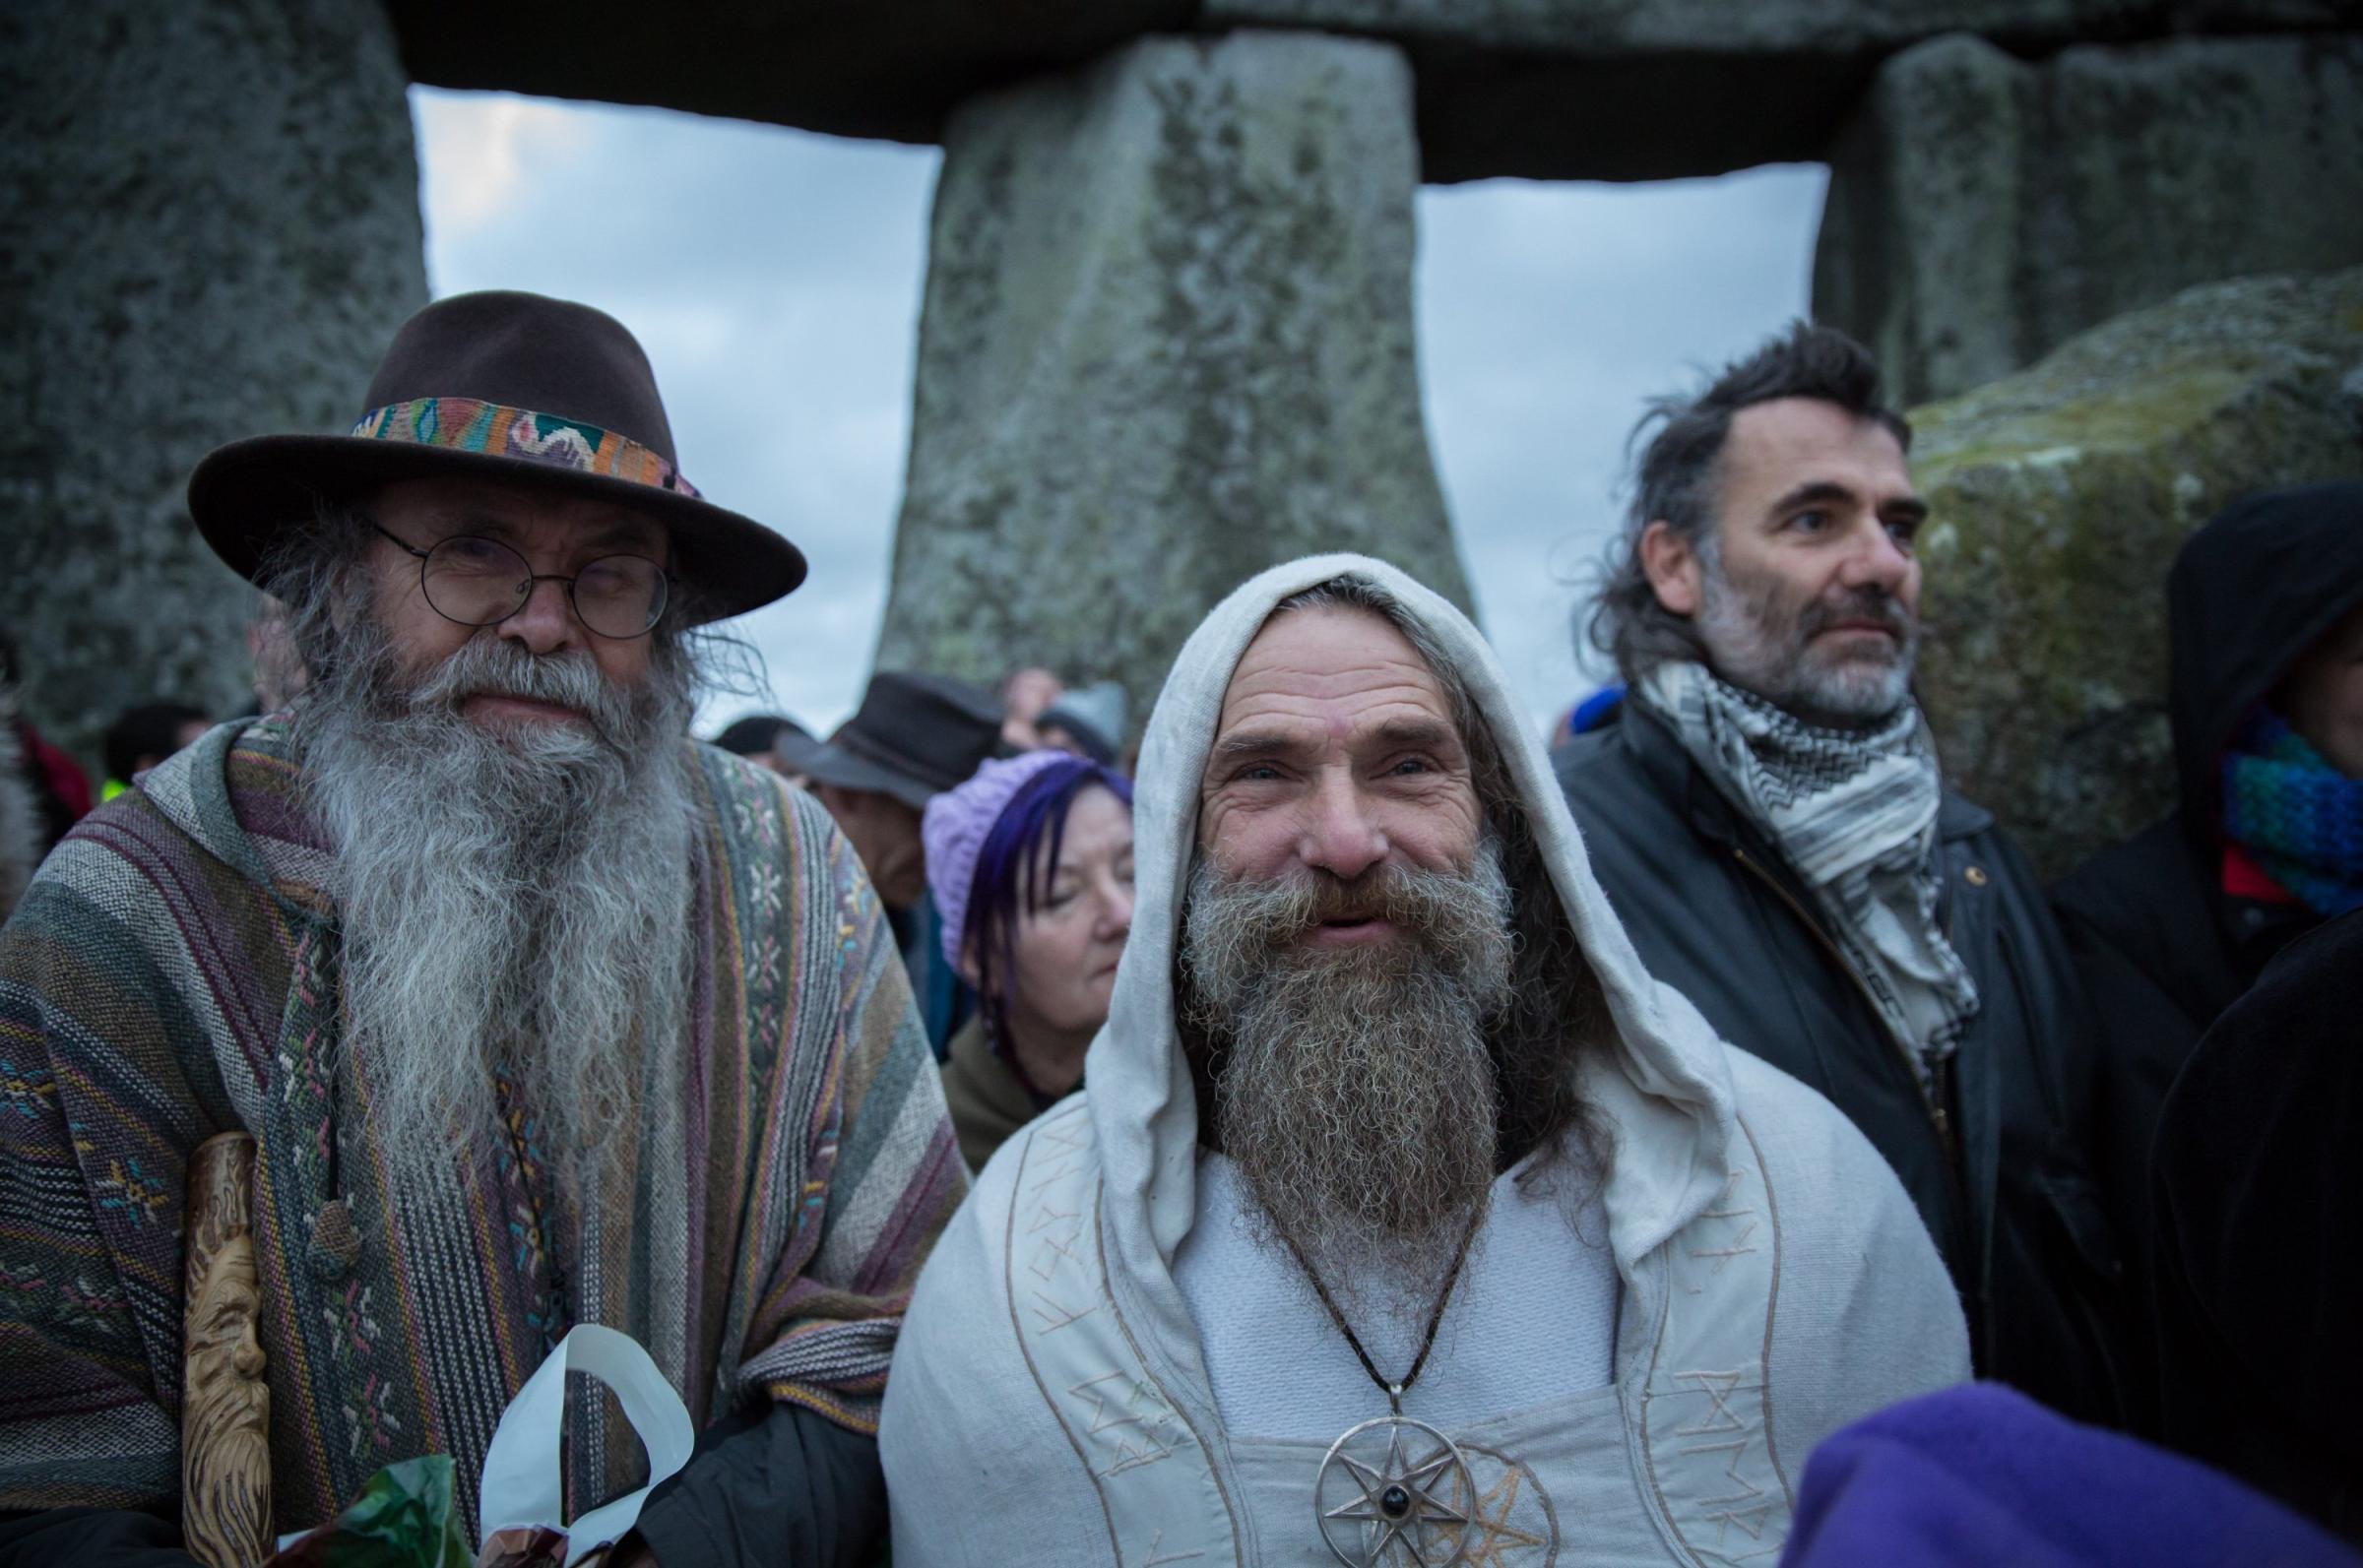 Druids Celebrate The Winter Solstice At Stonehenge